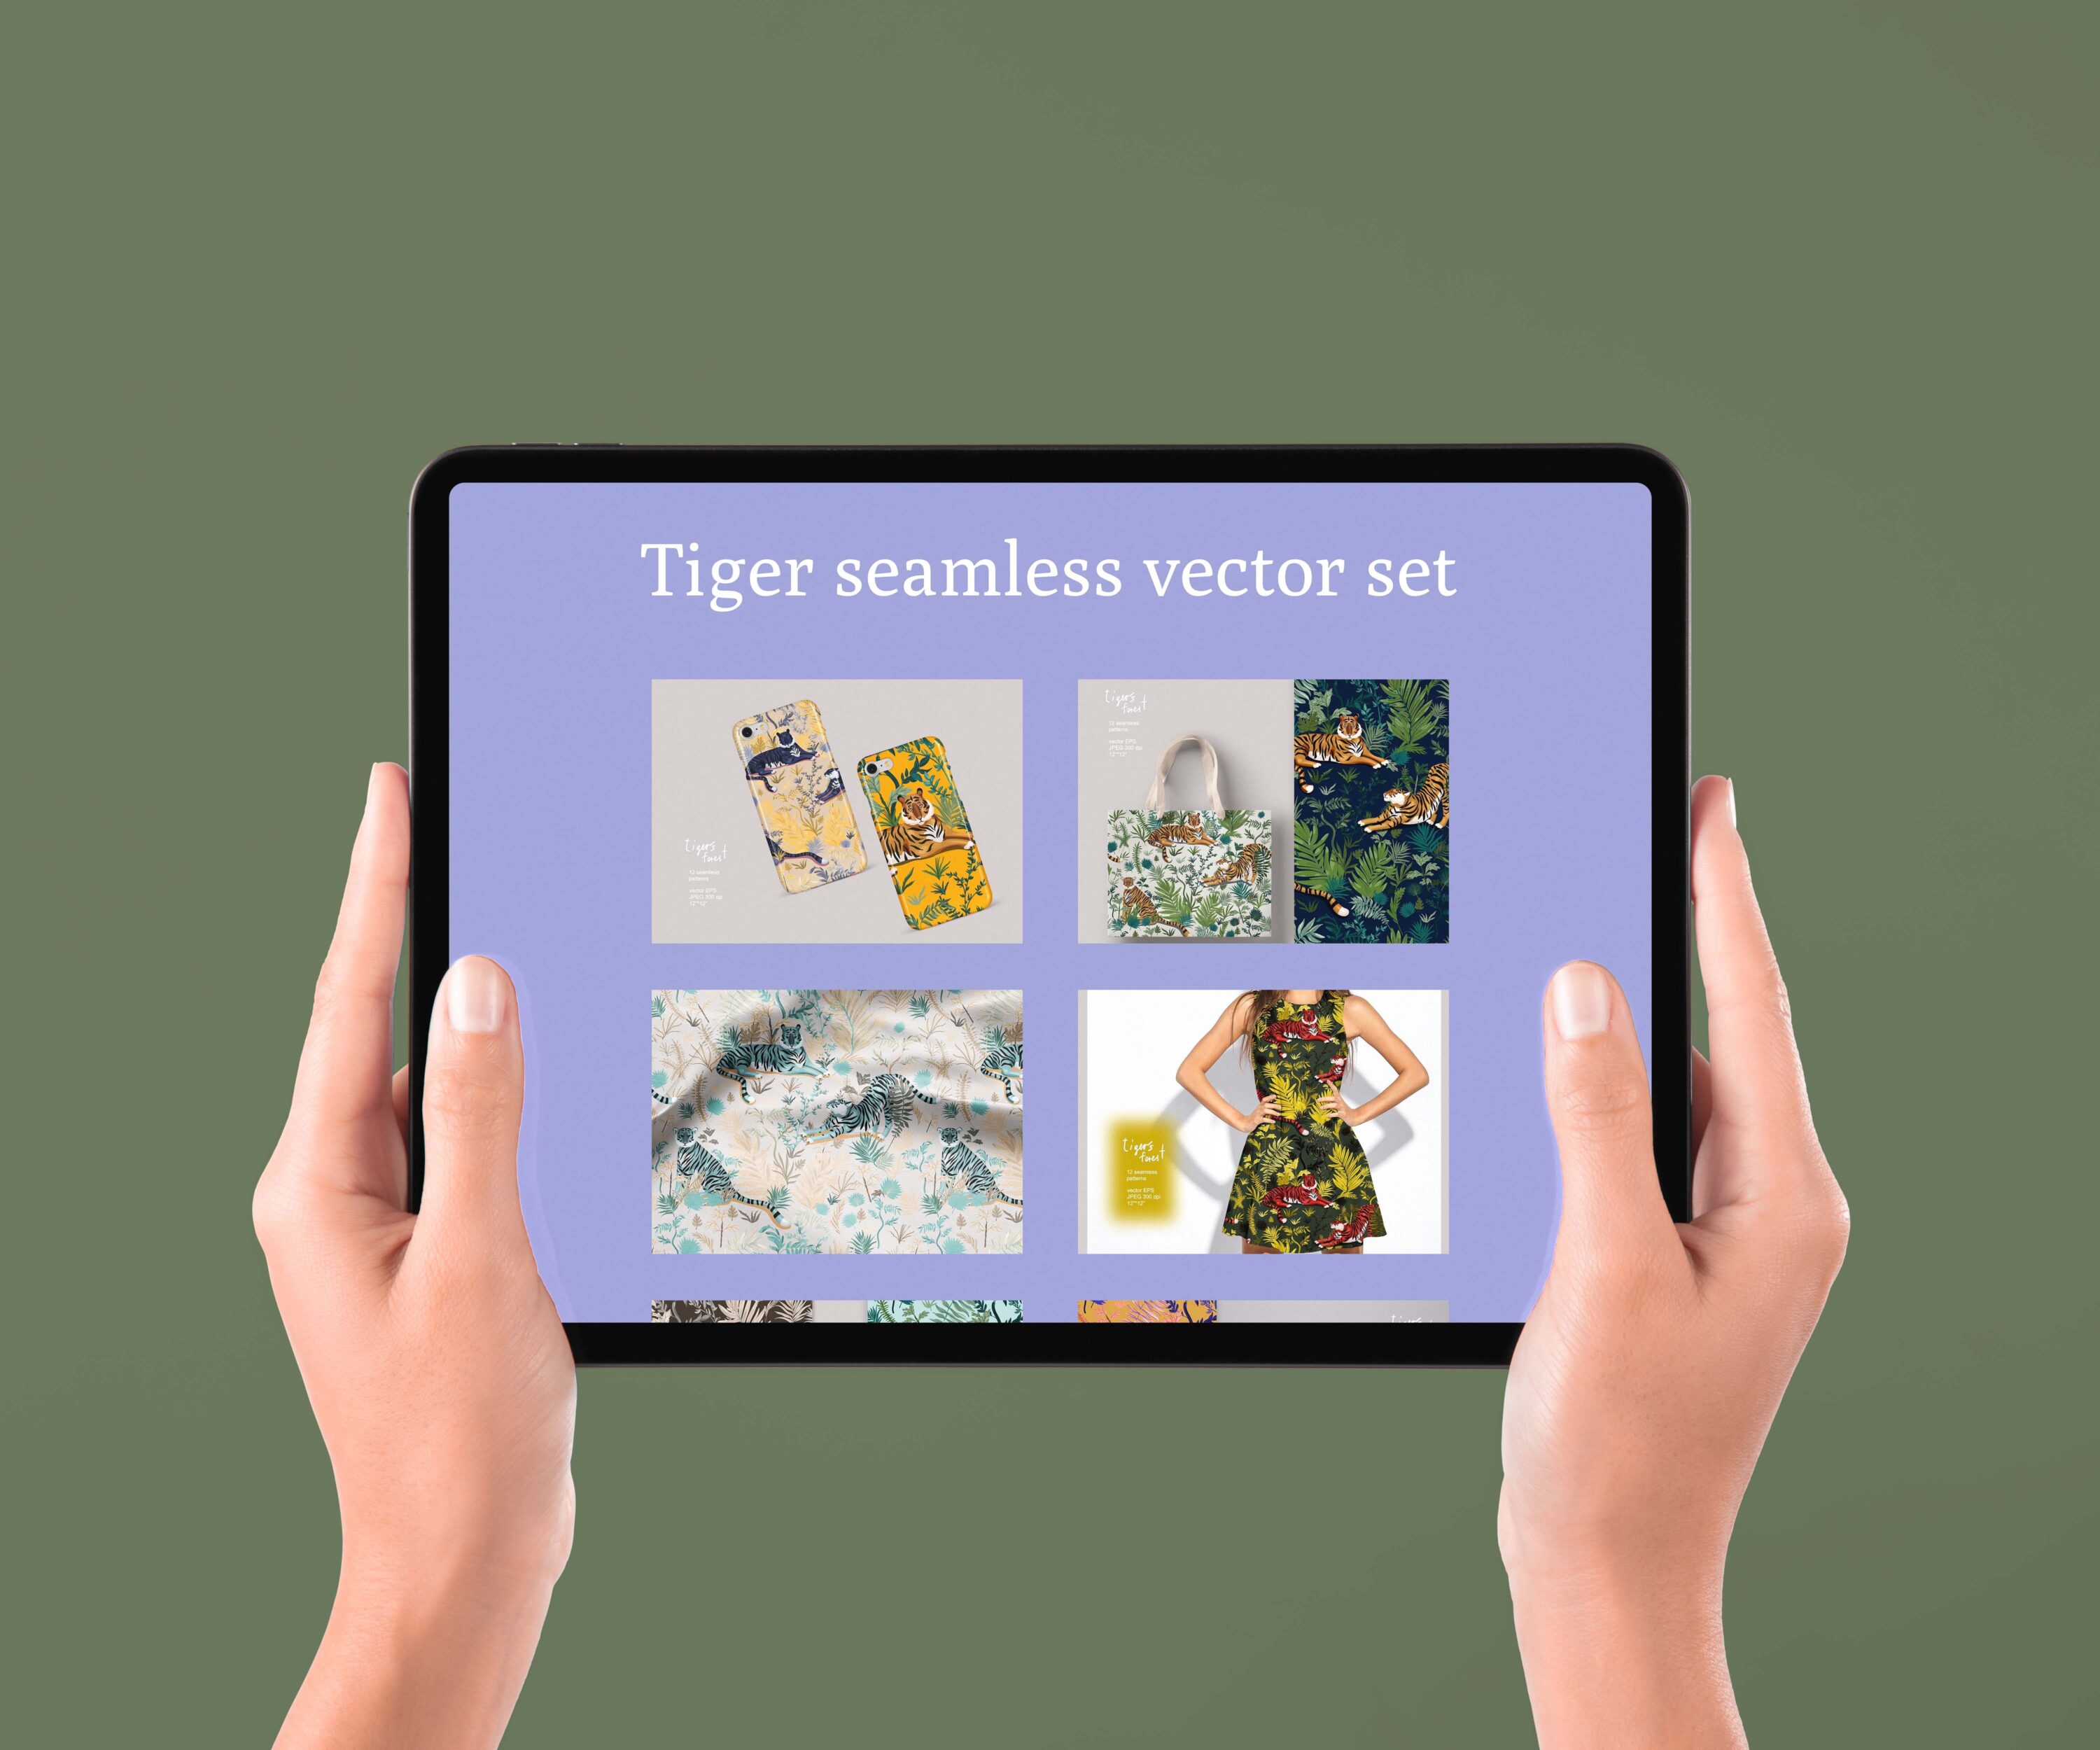 Tiger seamless vector set- tablet.